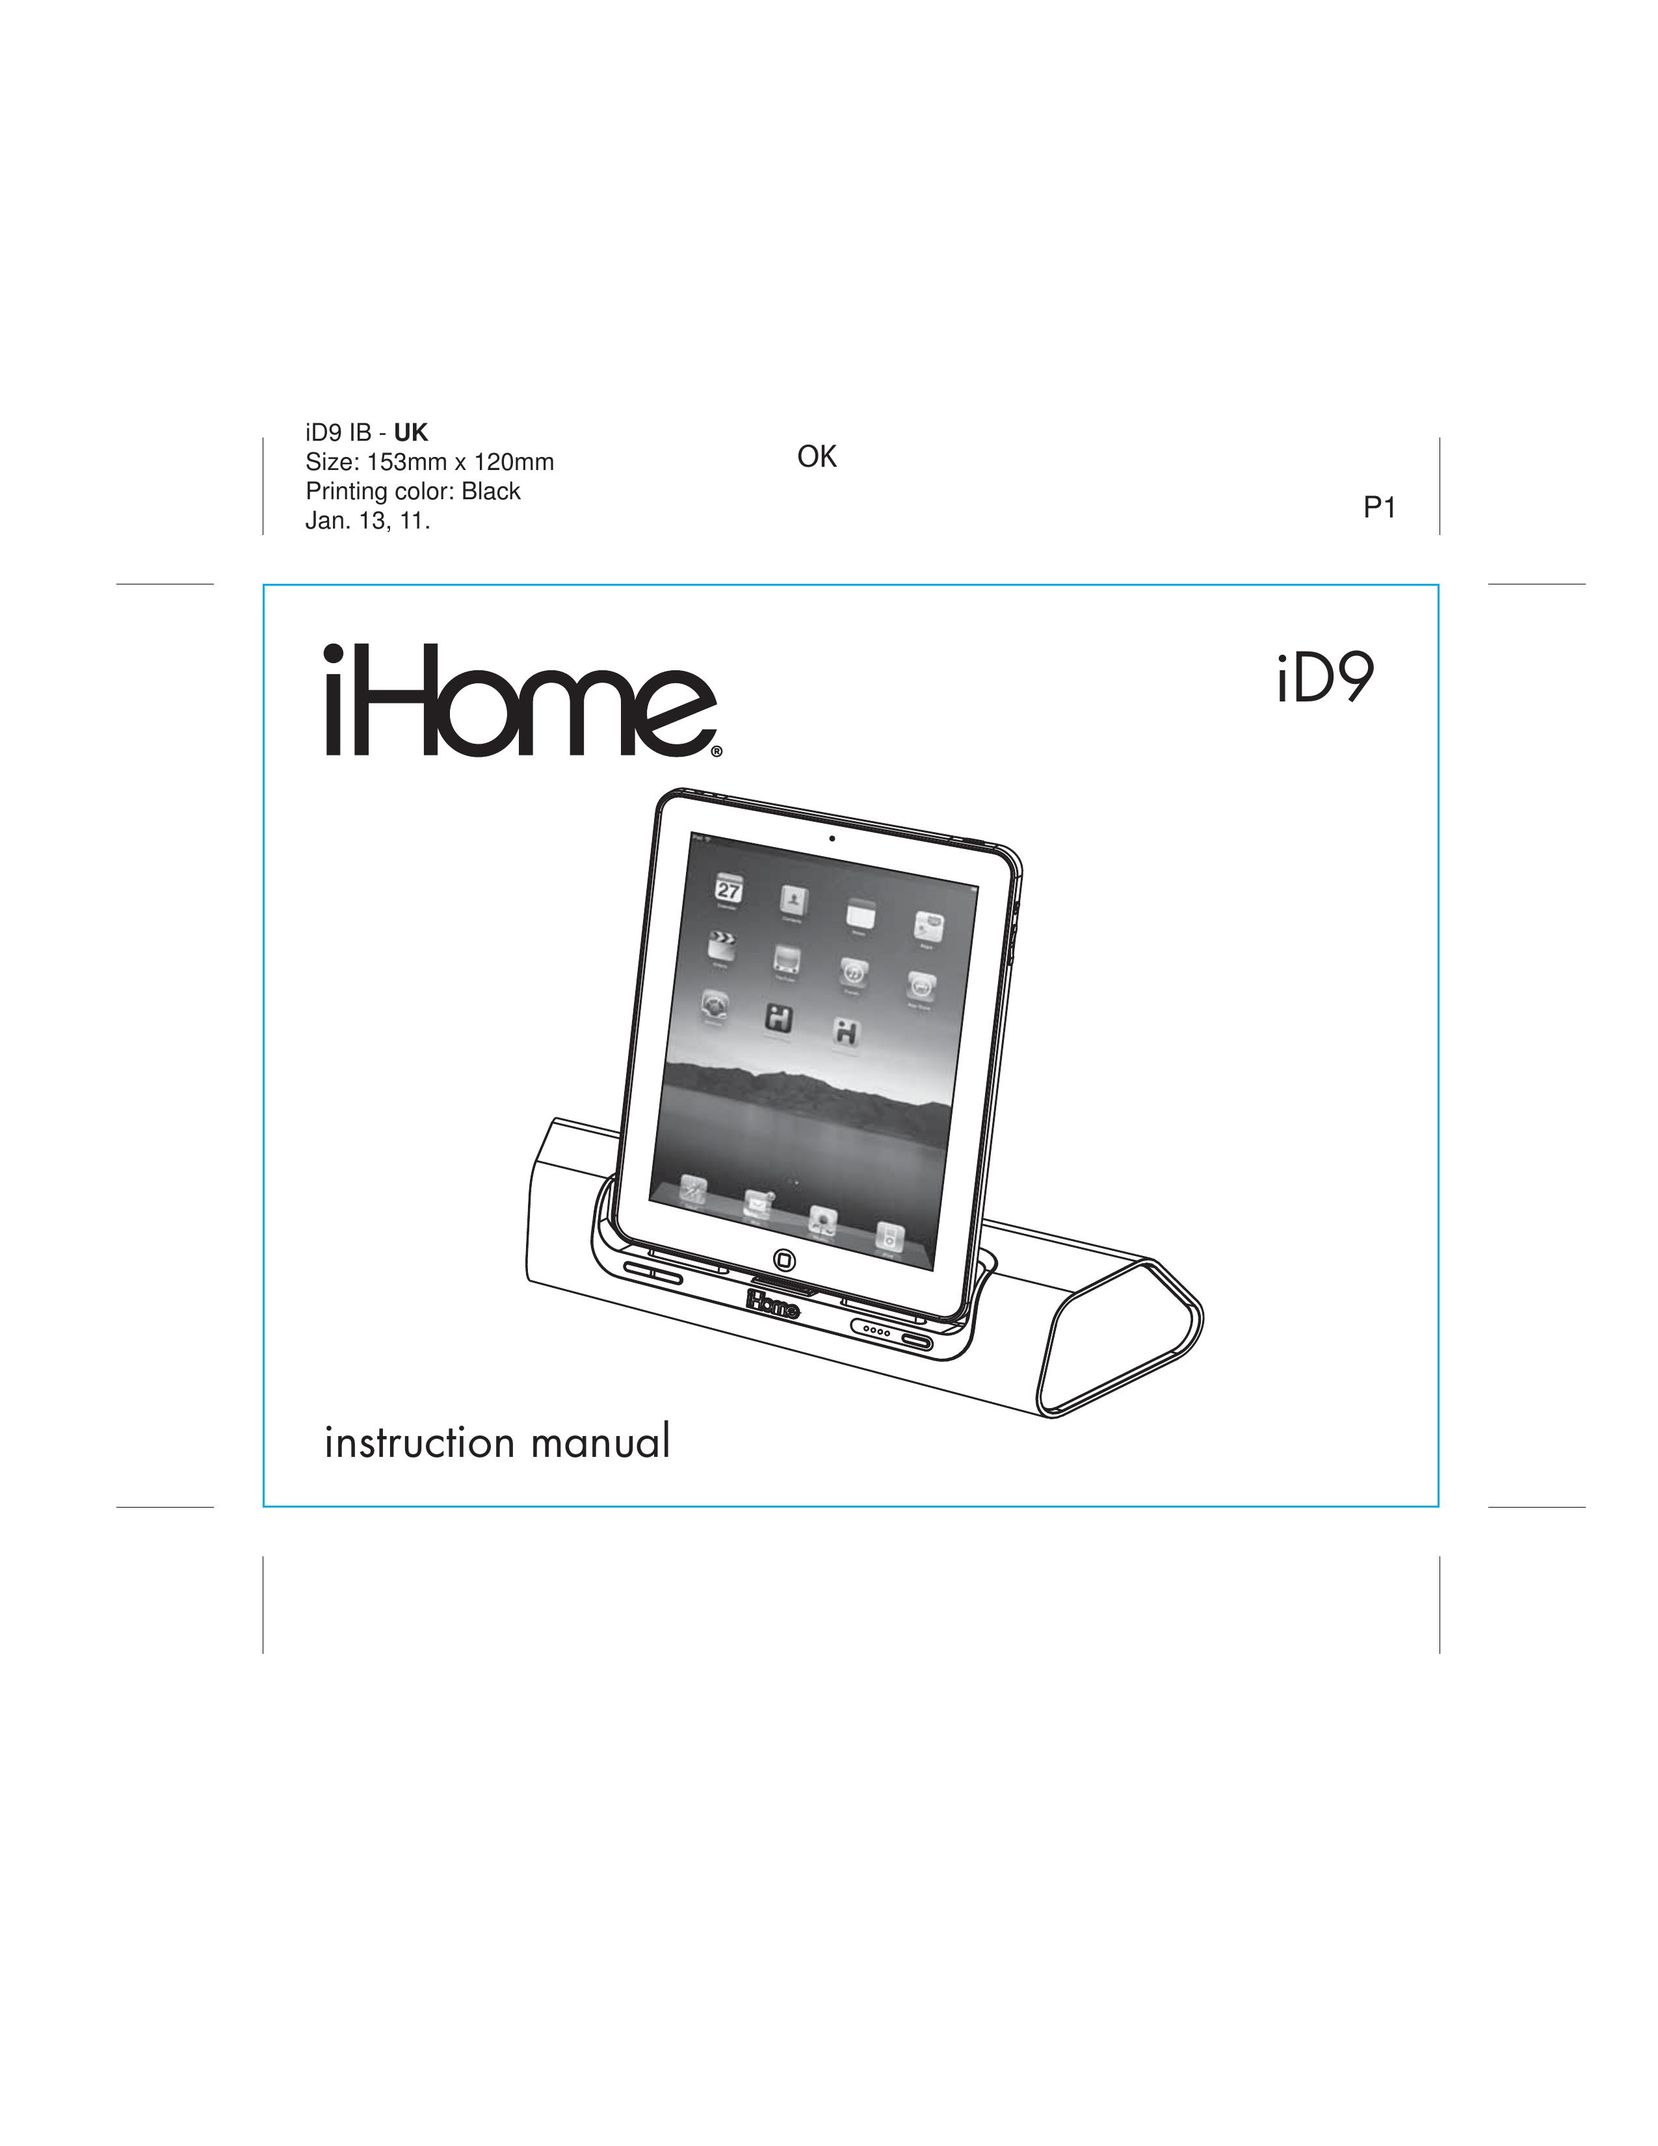 iHome ID9 MP3 Docking Station User Manual